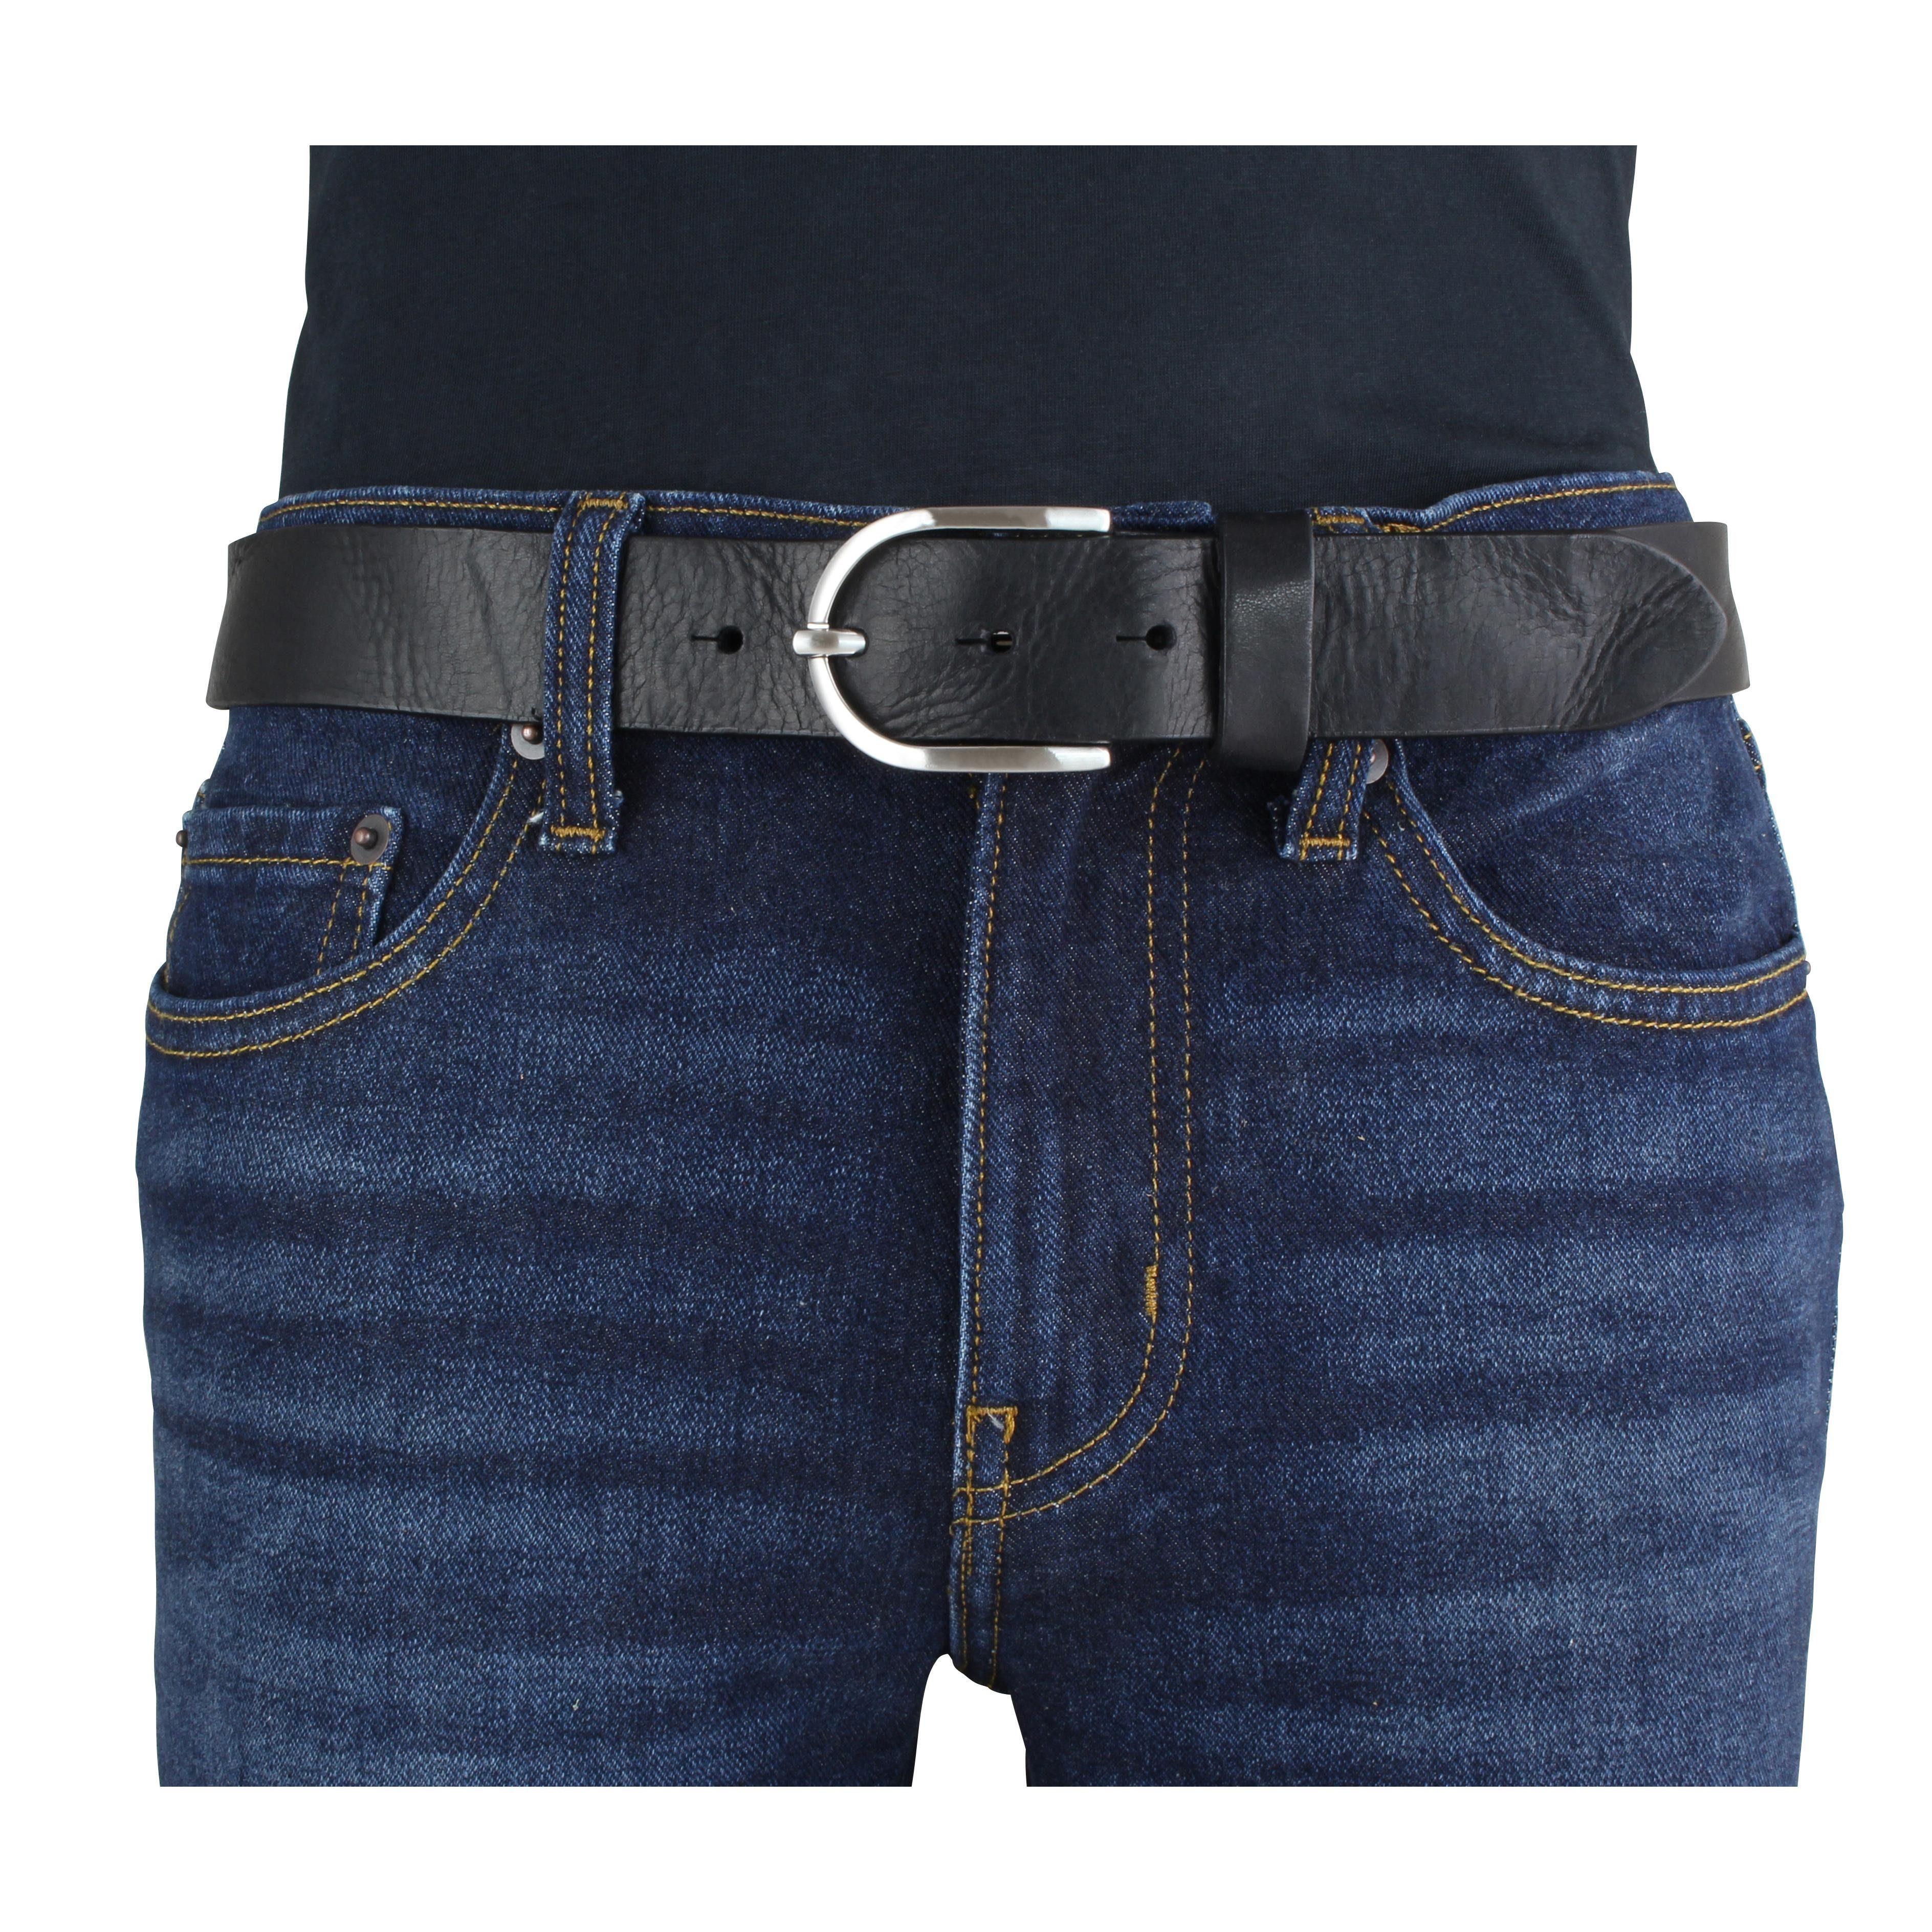 Silber Used-Look für aus Dam 3,5 Damen-Gürtel cm - Vollrindleder Jeans-Gürtel Ledergürtel BELTINGER Marine,